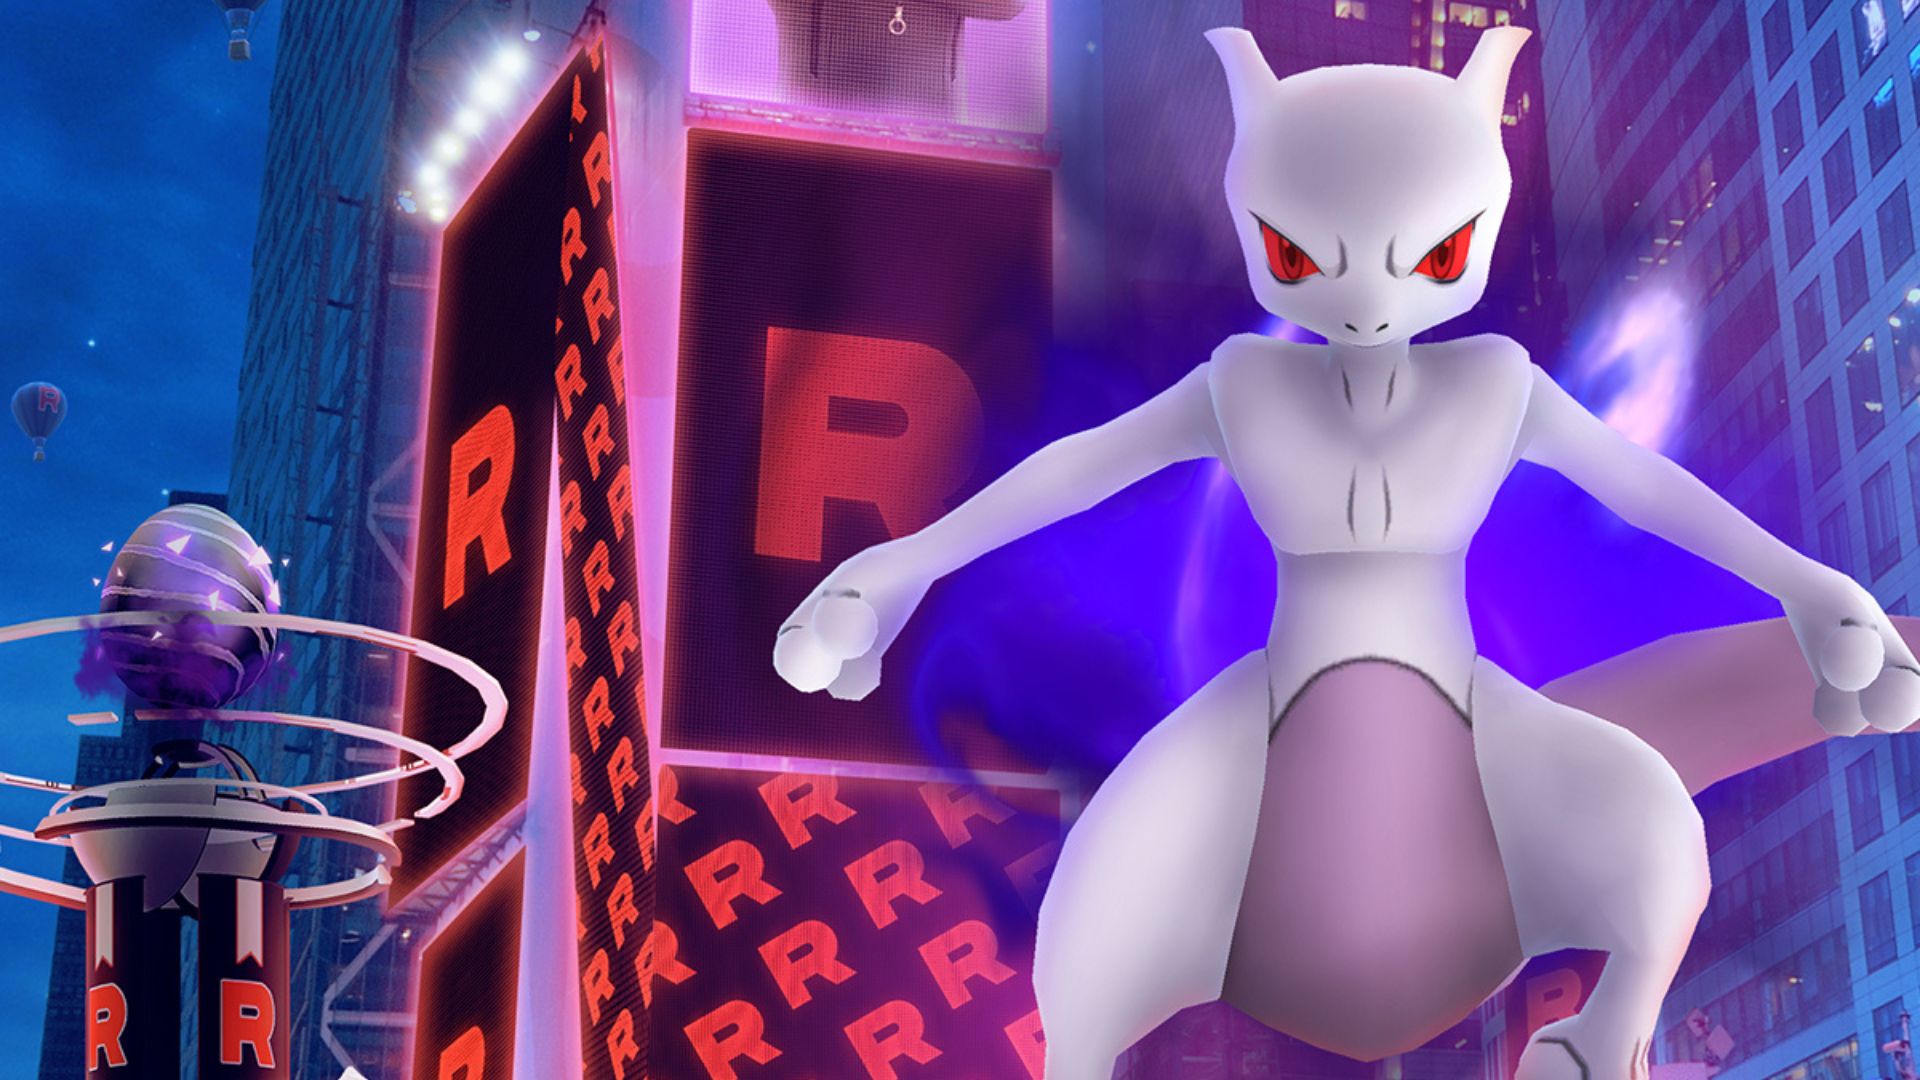 Lifting&Zombies on X: Ummm, I just found a Shadow Mewtwo raid! 🤣 # PokemonGO  / X